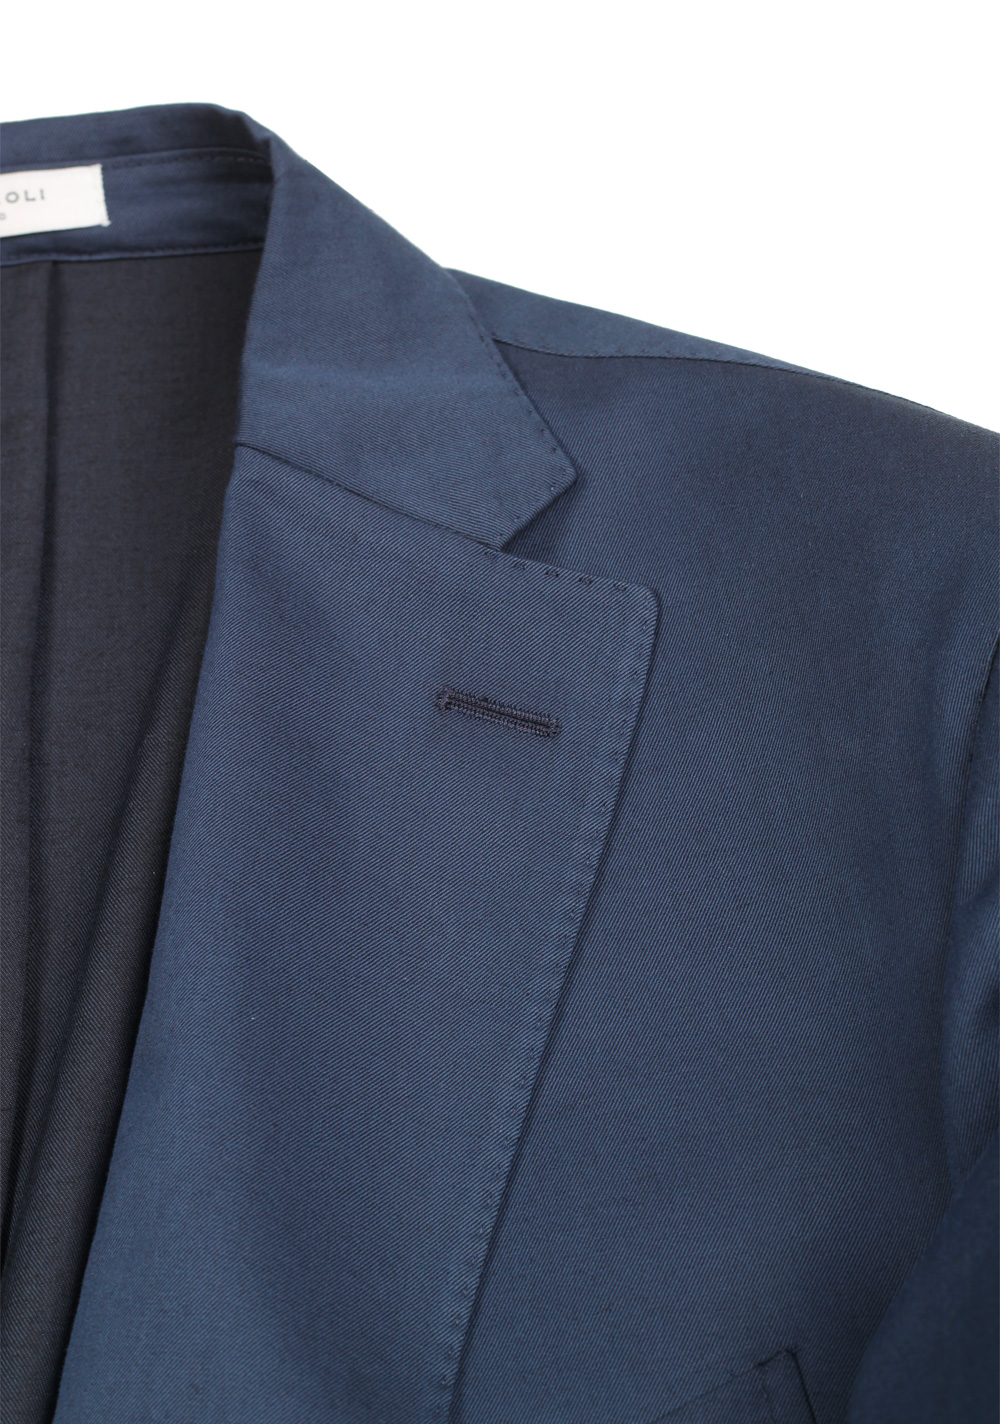 Boglioli K Jacket Blue Suit Size 56 / 46R U.S. | Costume Limité